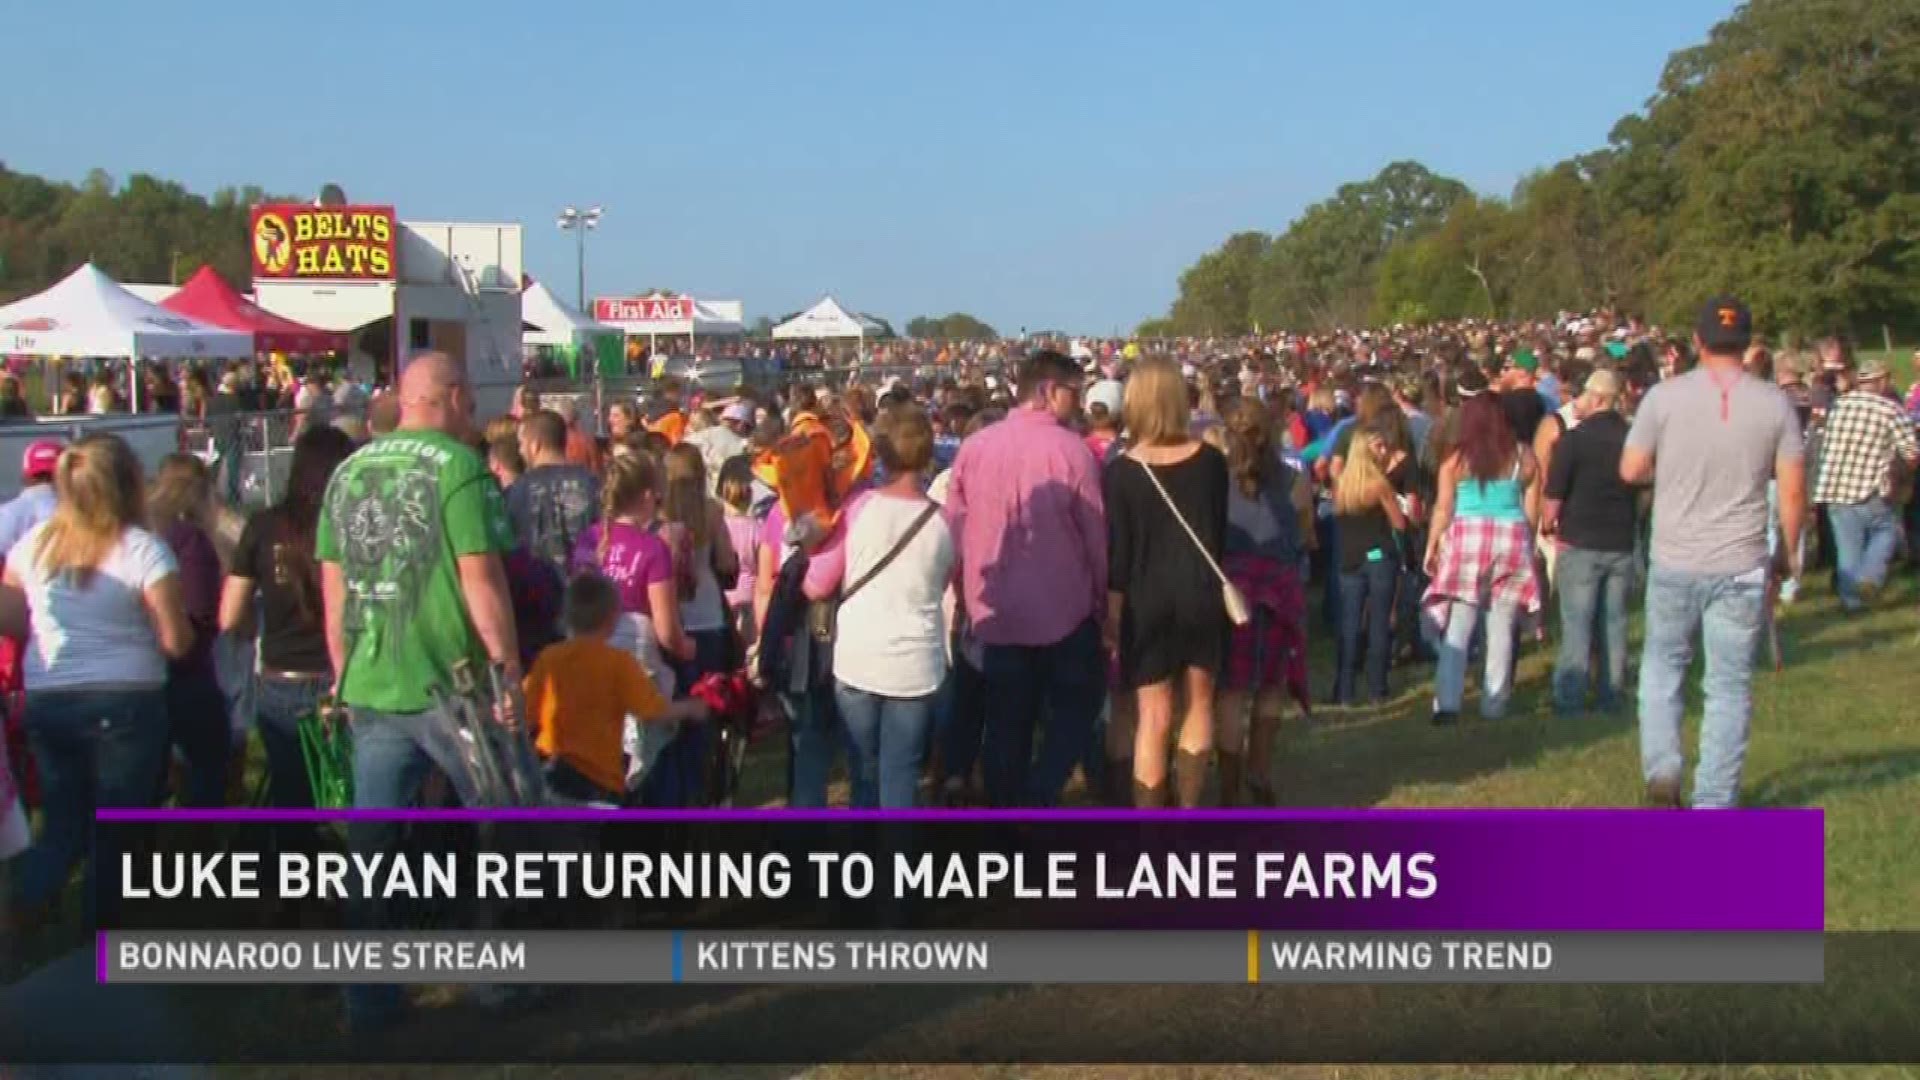 Luke Bryan will be returning to Maple Lane Farms as part of his 2016 Farm Tour.